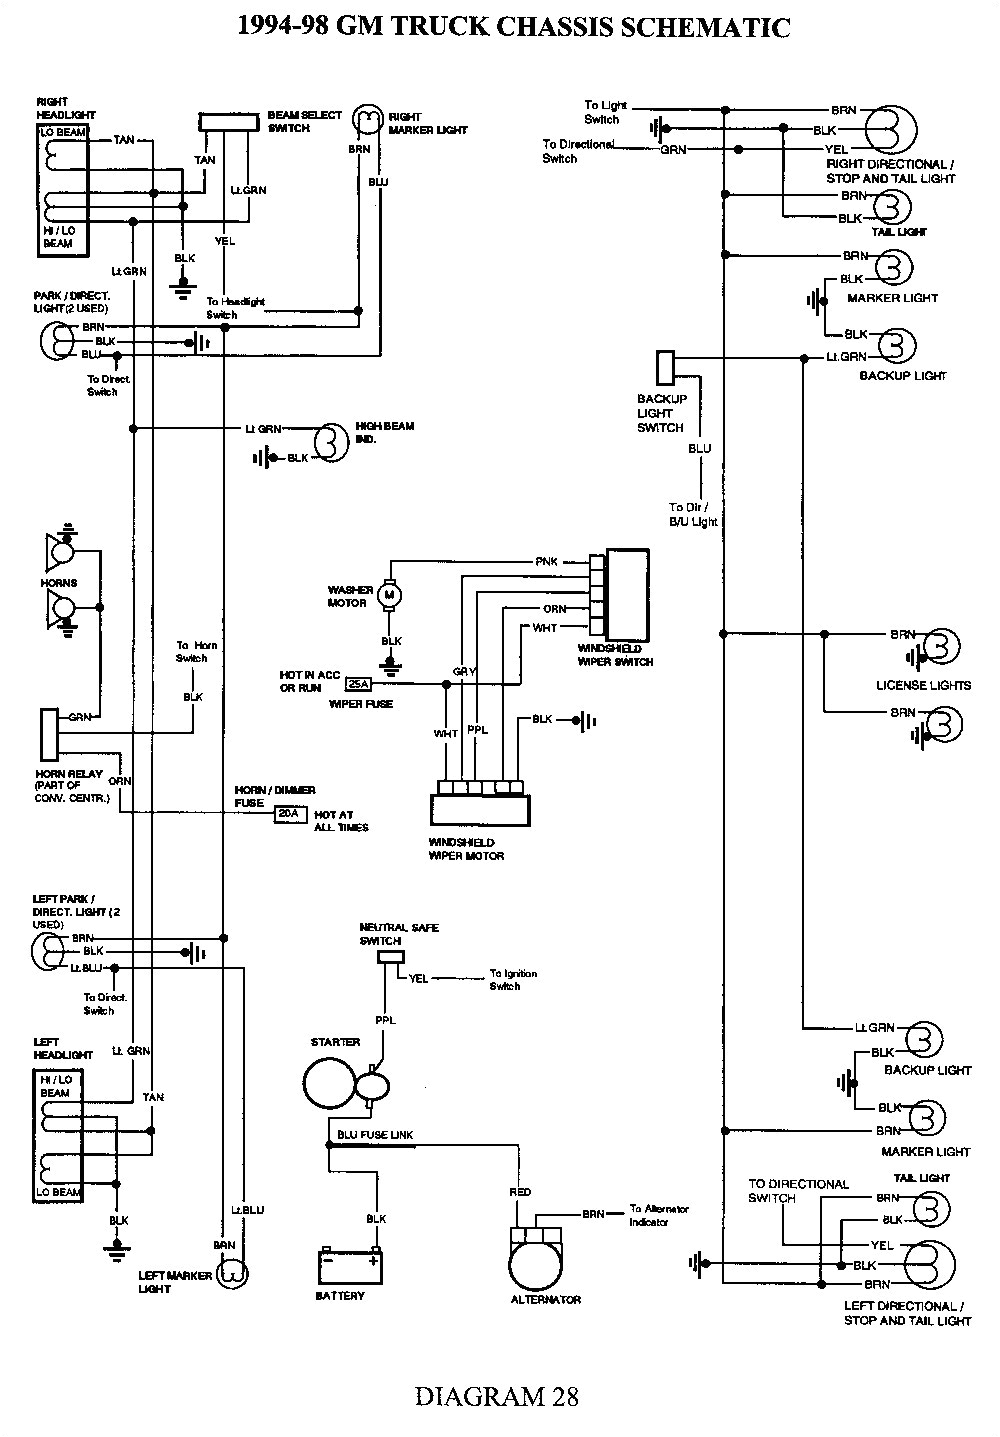 77 gmc wiring diagram wiring diagram wiring lamp diagram 82 chevy truck